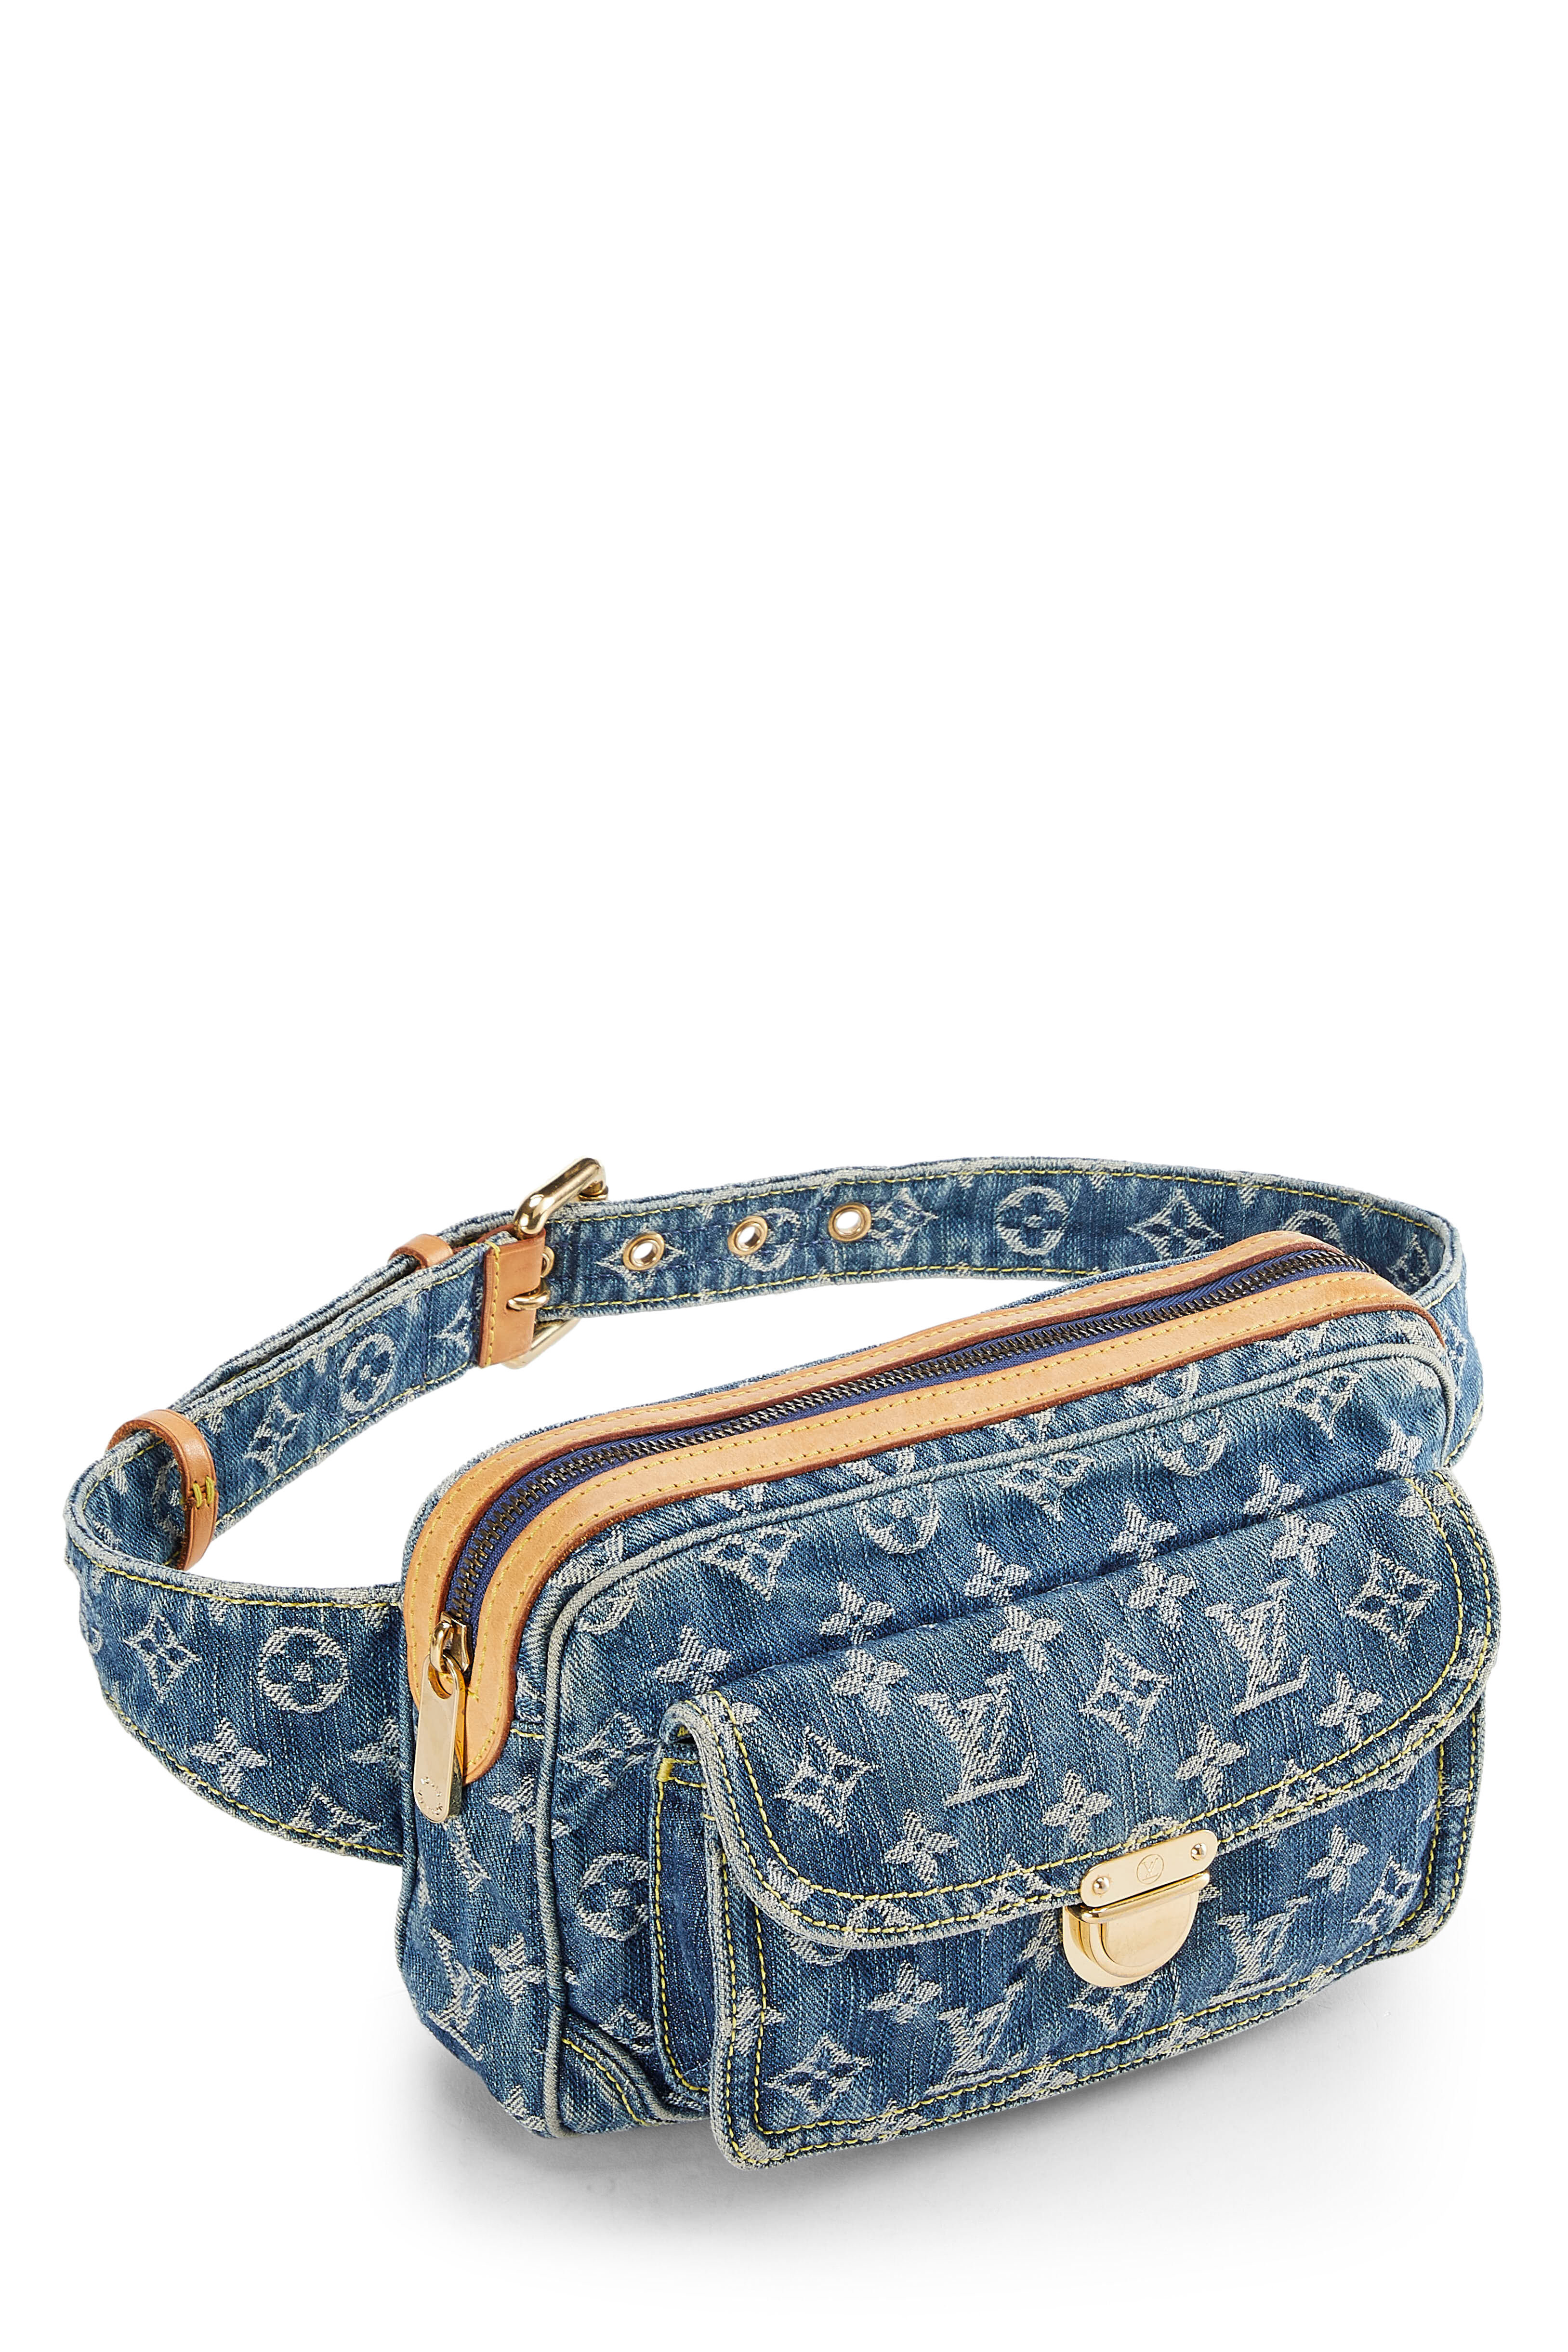 Louis Vuitton Monogram Denim Bum Bag - Farfetch